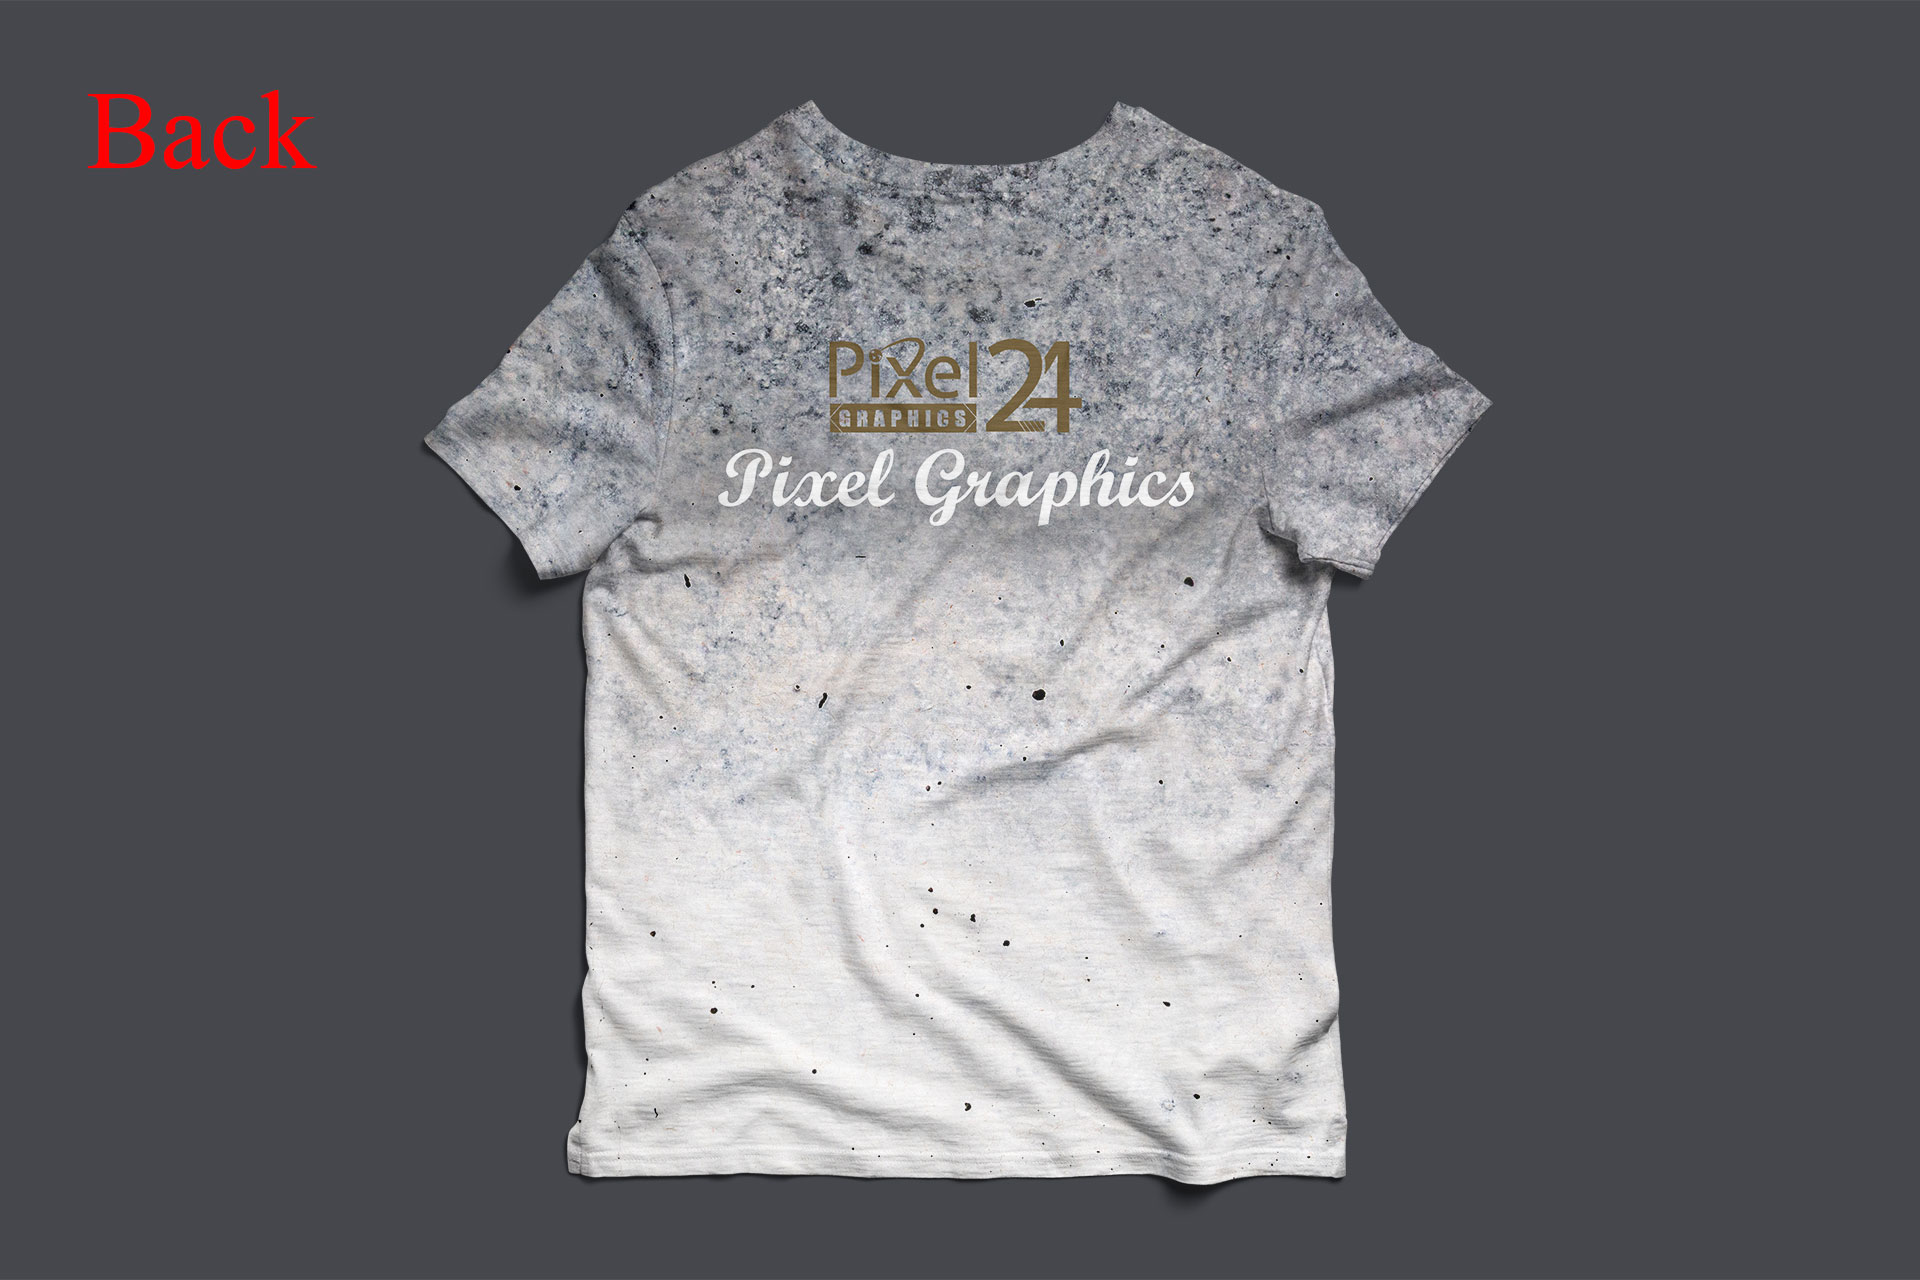 T-Shirt Design Merchandise || Clipping Path Services || Photo Editing Services || Image Editing Services